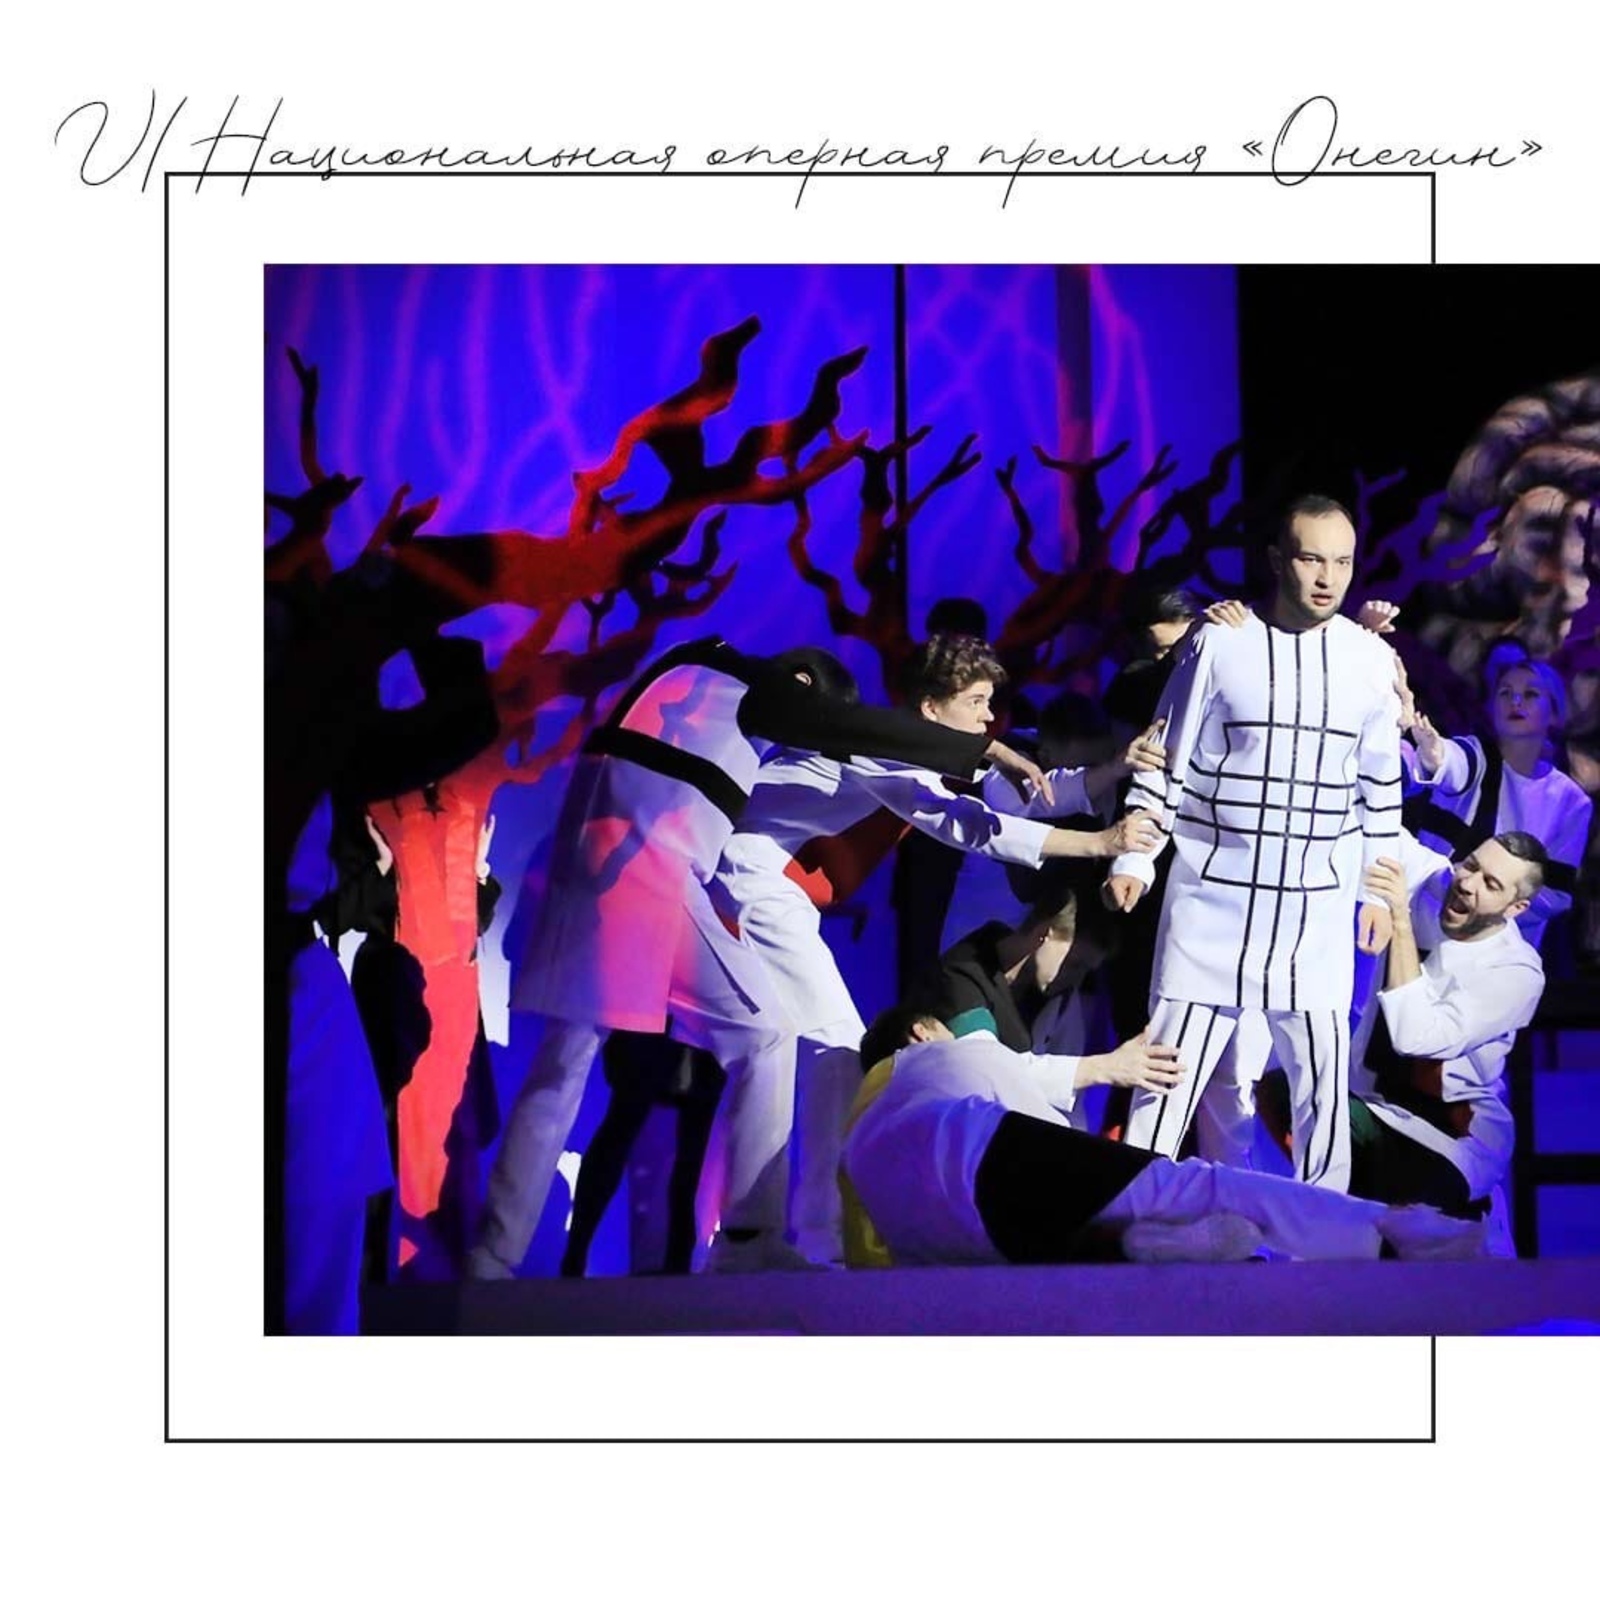 Башкирский театр оперы и балета вошел в шорт-лист премии «Онегин»